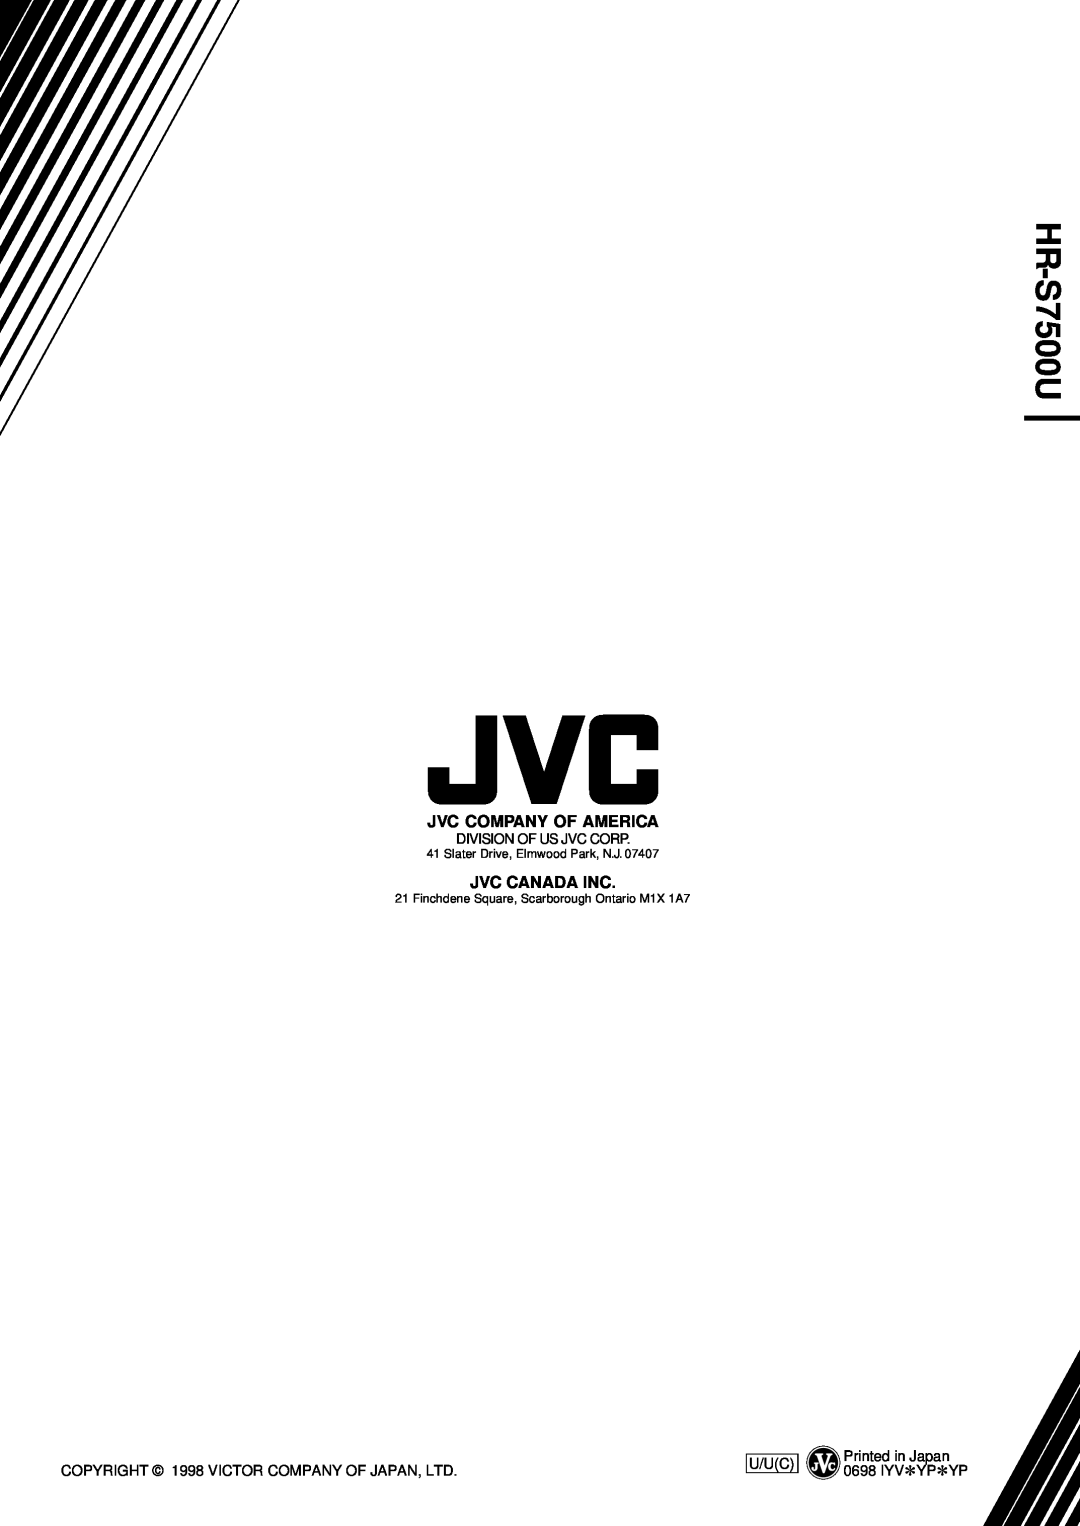 JVC HR-S7500U manual Jvc Company Of America, Jvc Canada Inc, Division Of Us Jvc Corp, U/Uc, Printed in Japan 0698 IYV*YP*YP 